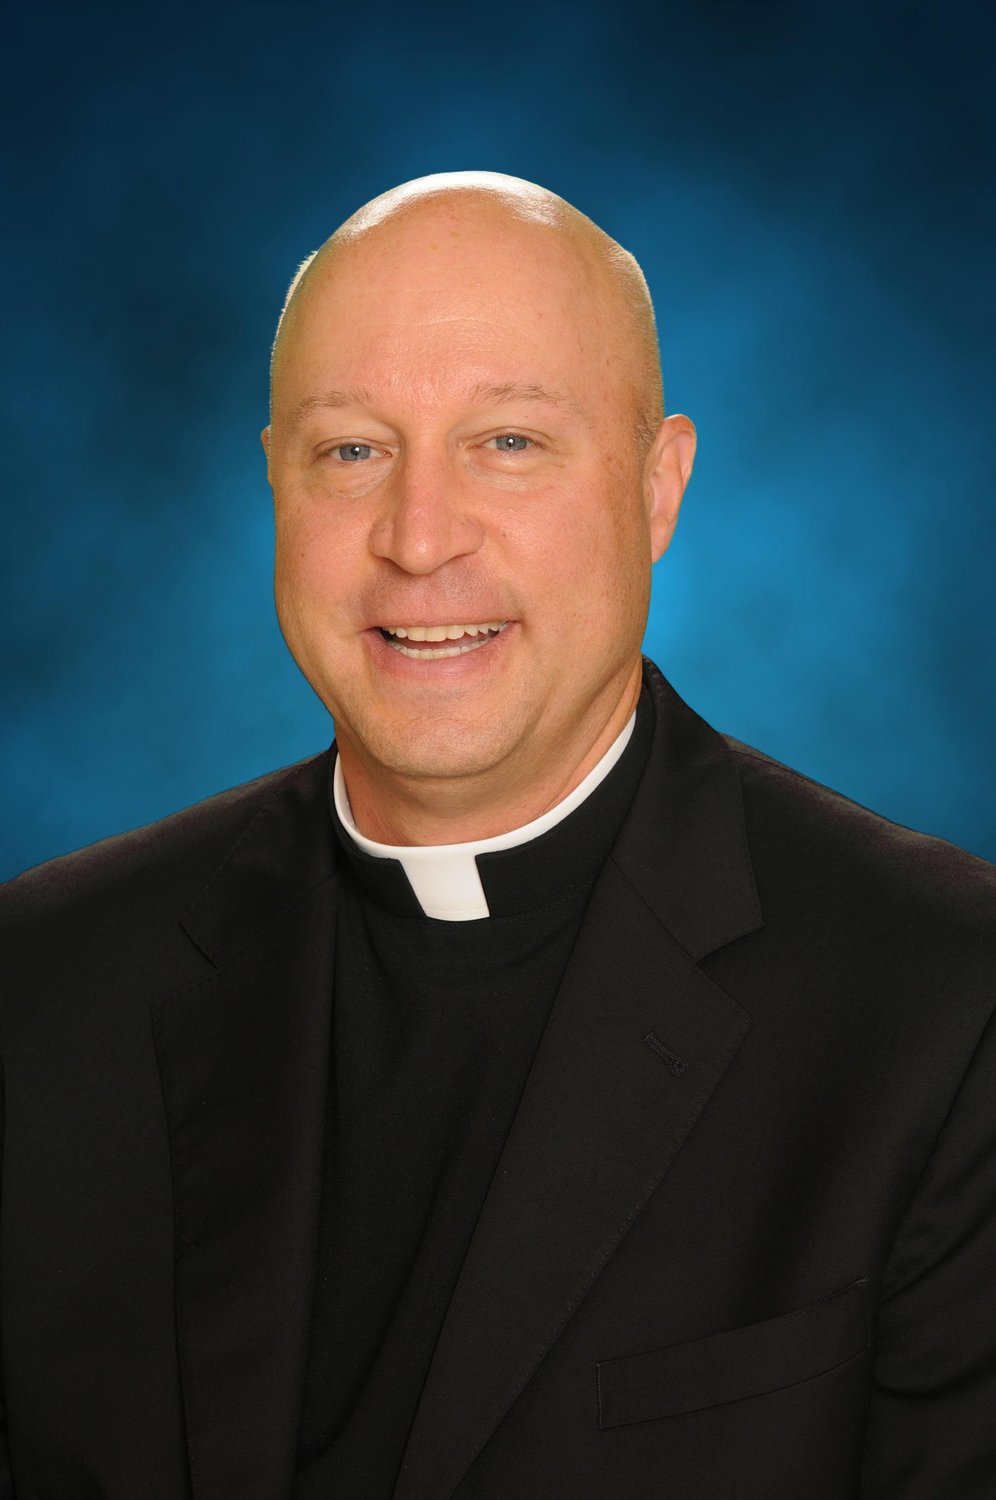 The Rev. Nicholas Zientarski